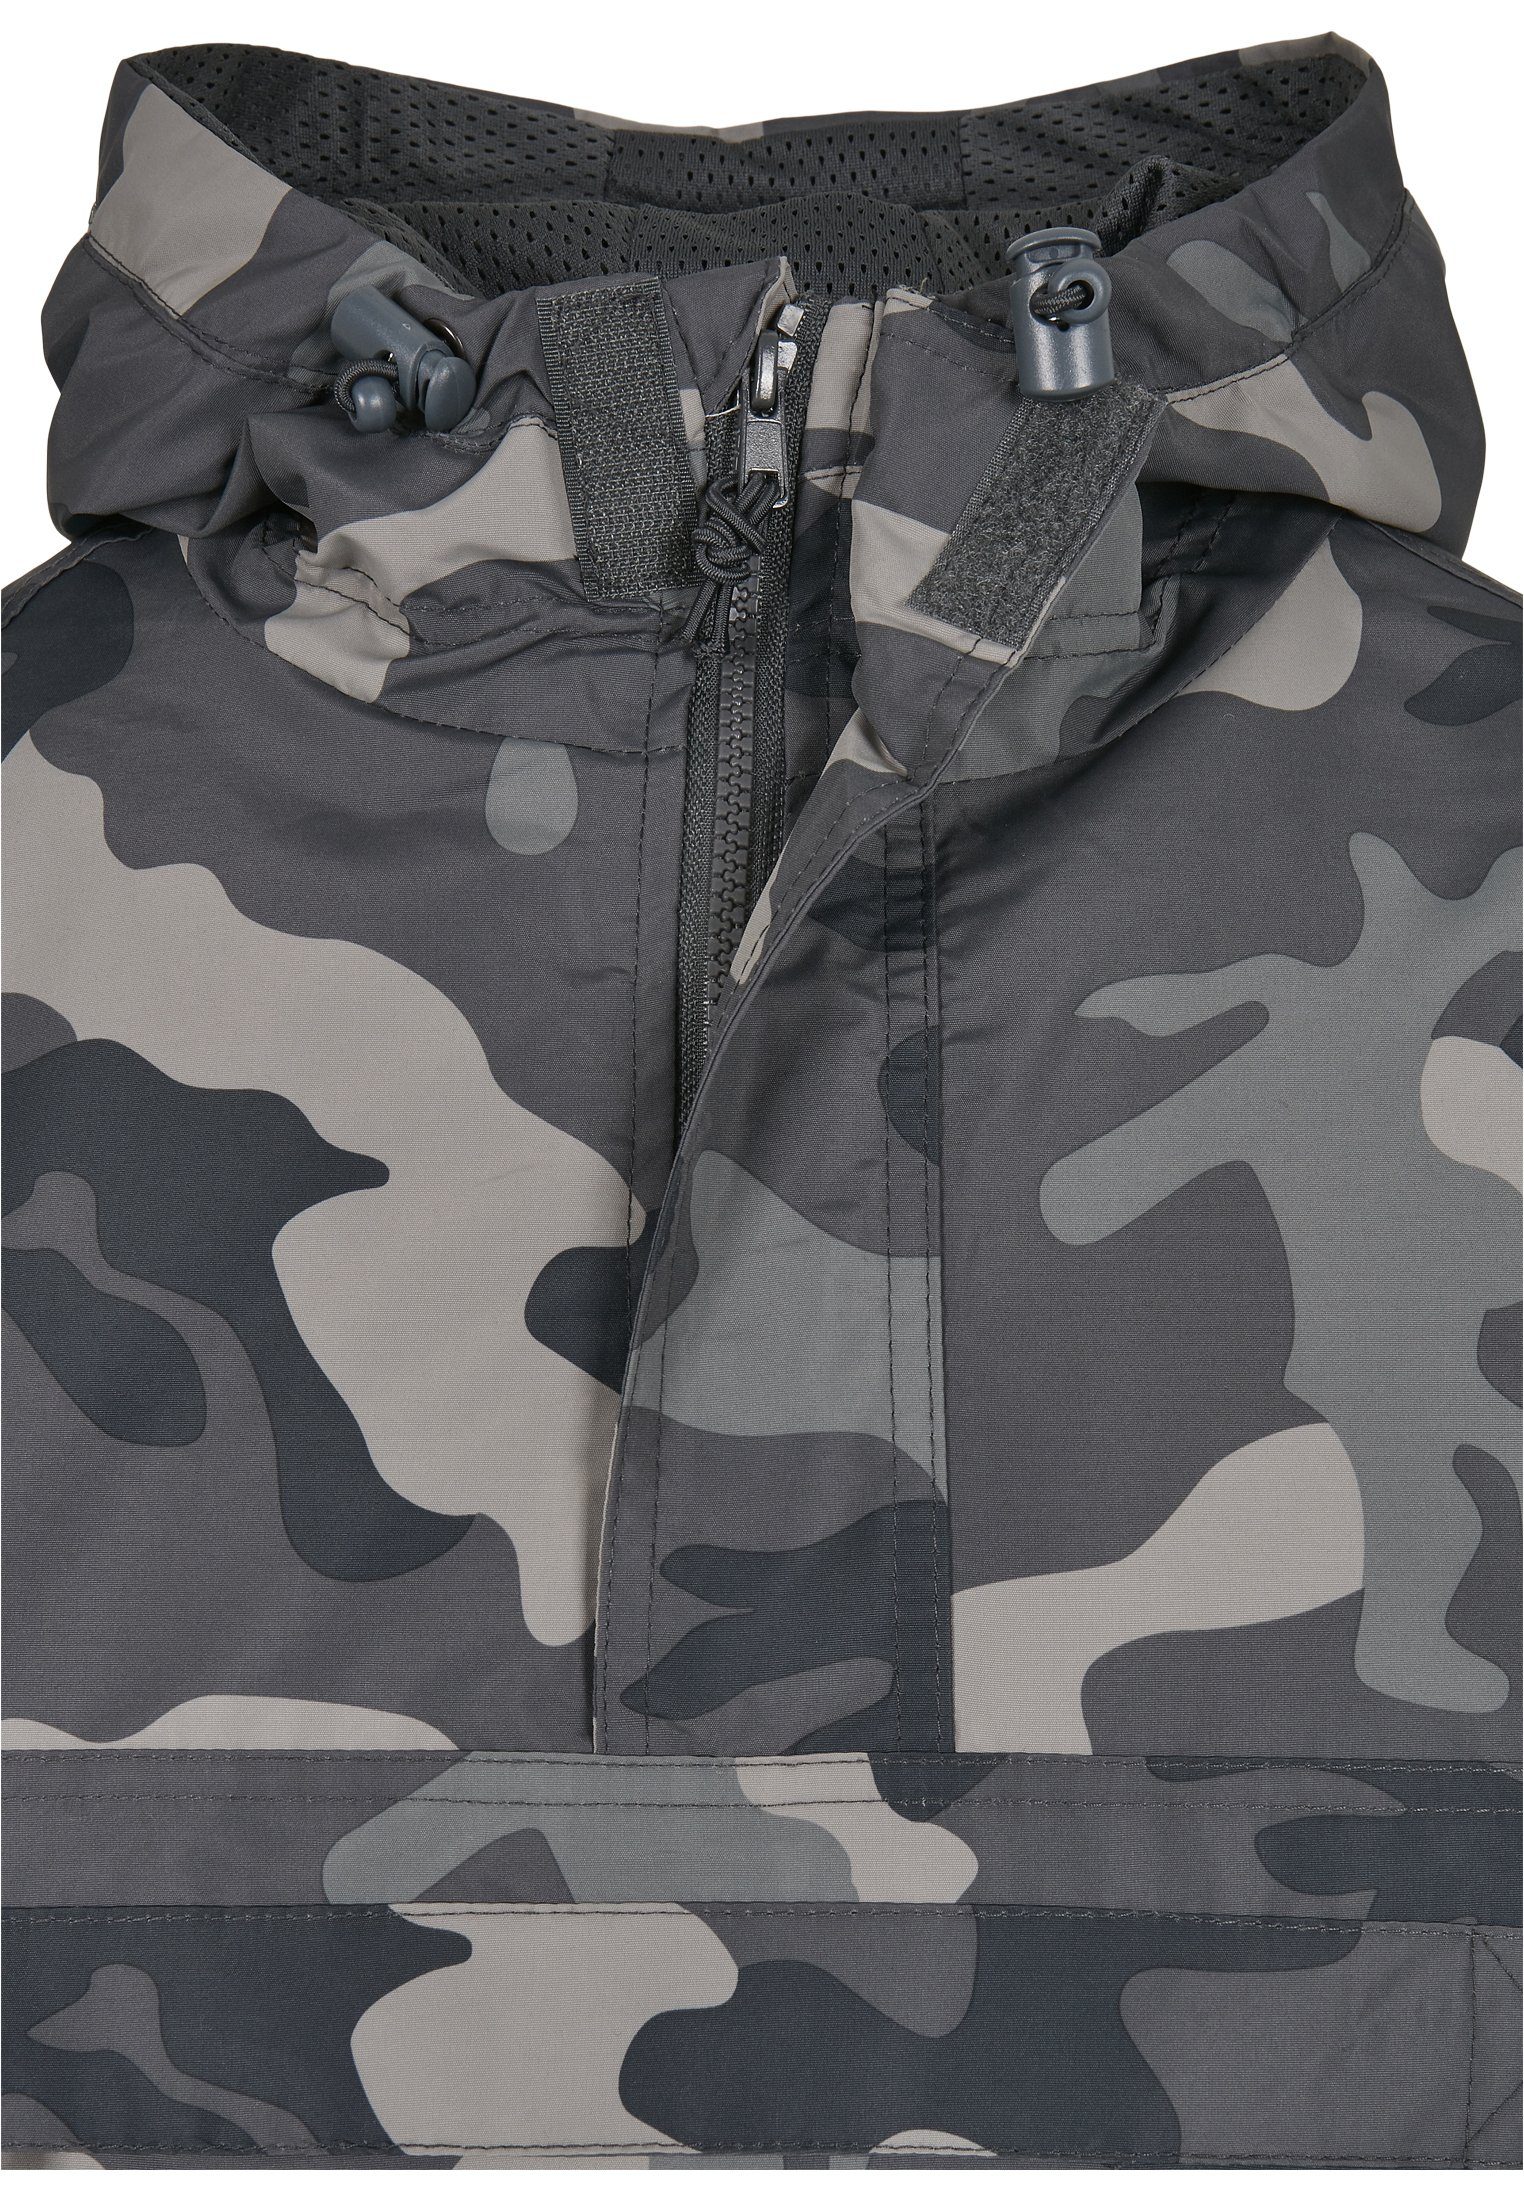 Brandit greycamouflage Pull Herren Outdoorjacke Summer Over Jacket (1-St)